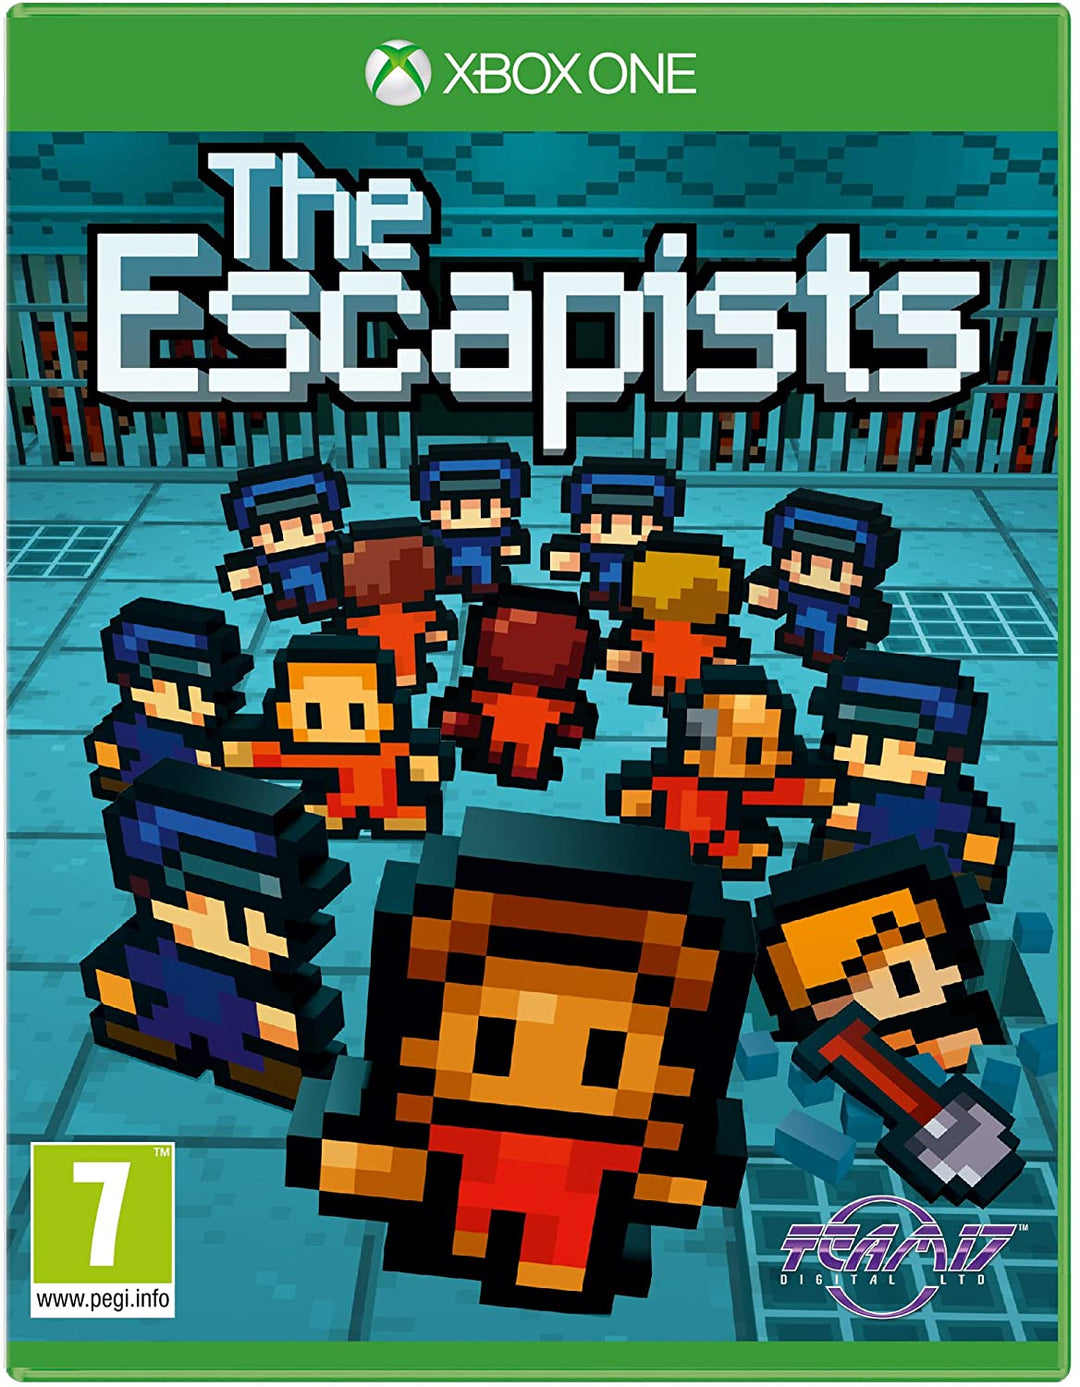 The Escapists (Xbox One)